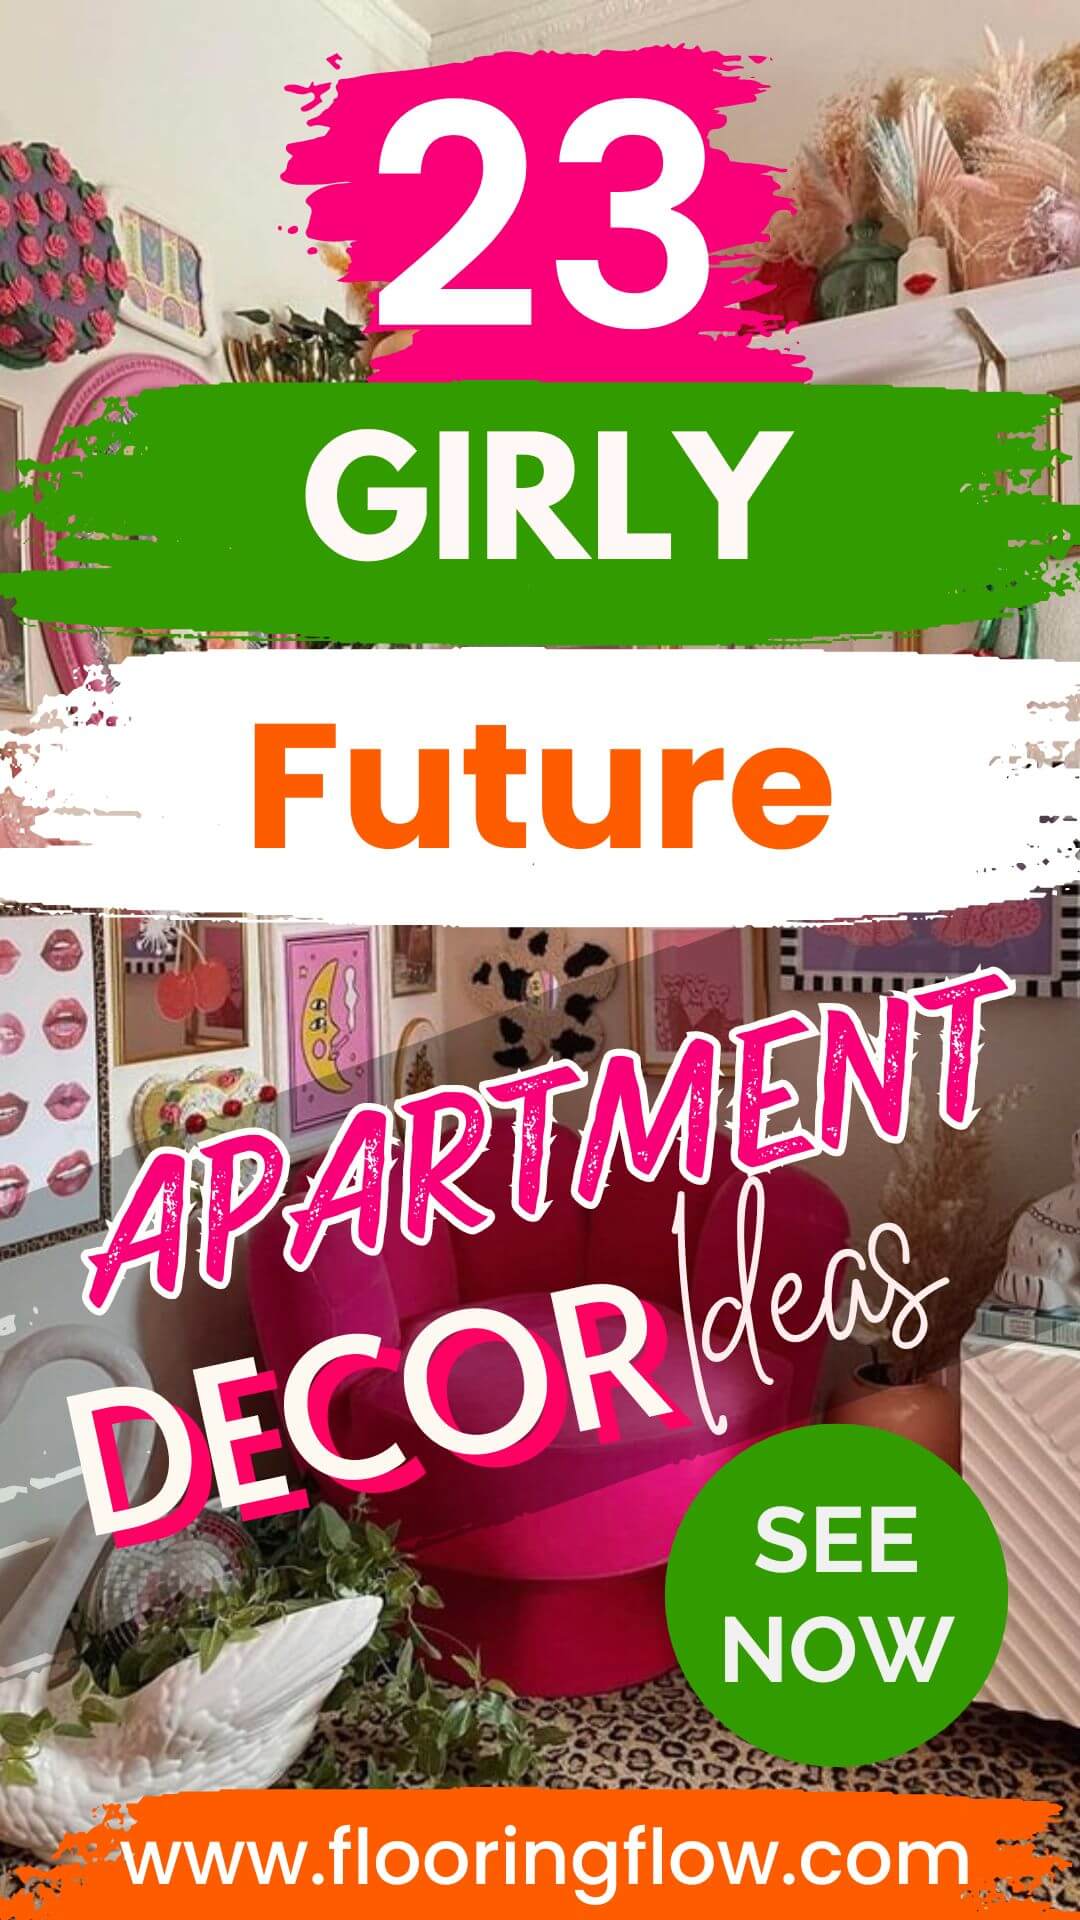 Girly future apartment decor ideas